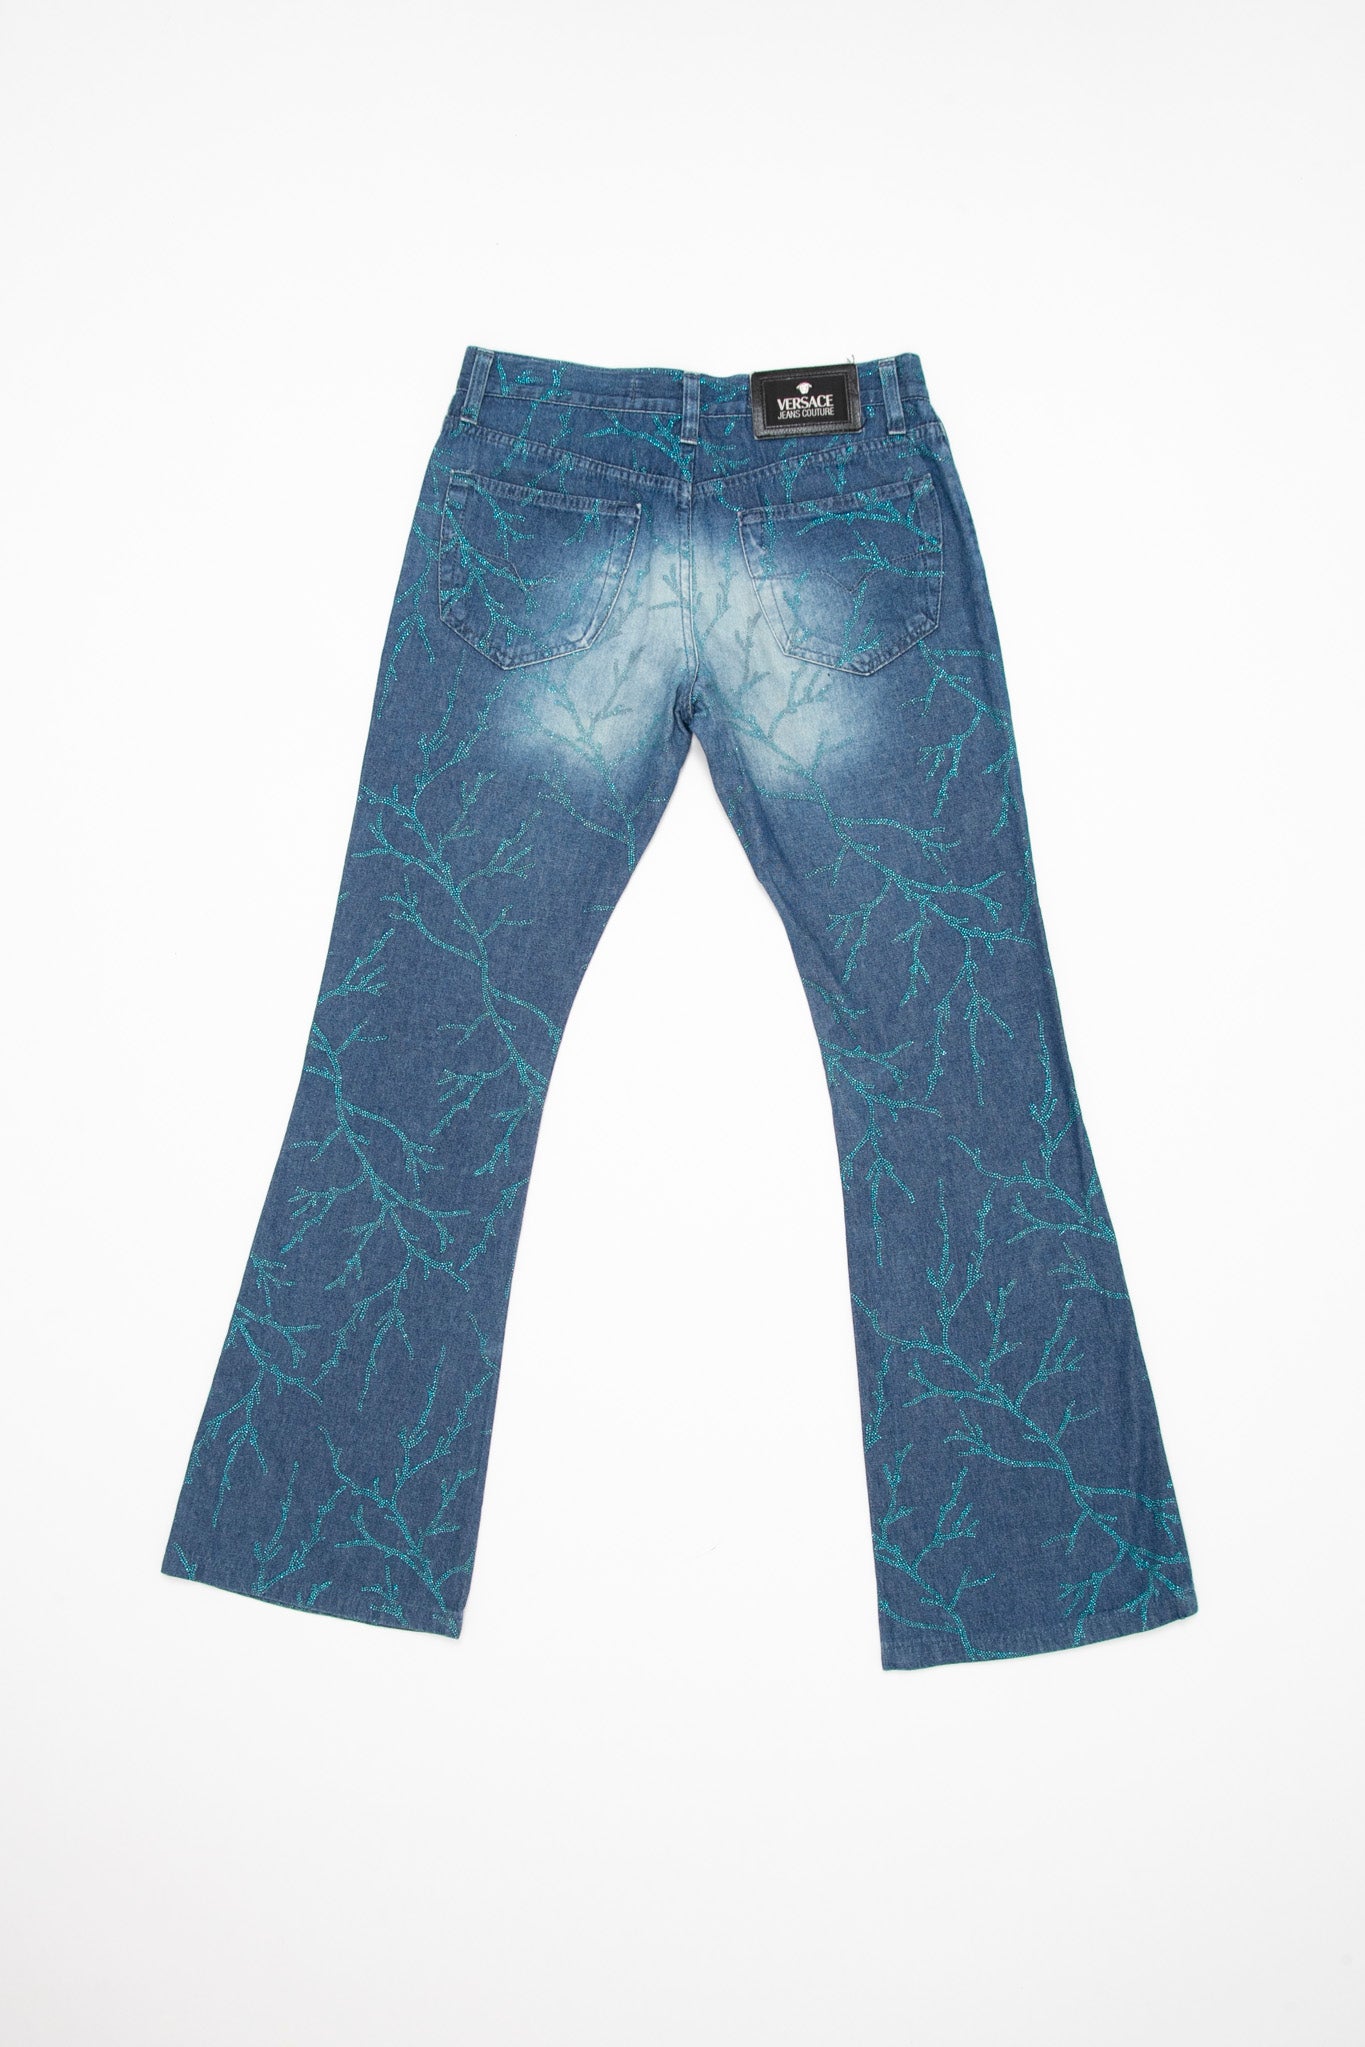 Versace Blue Lightning Jeans